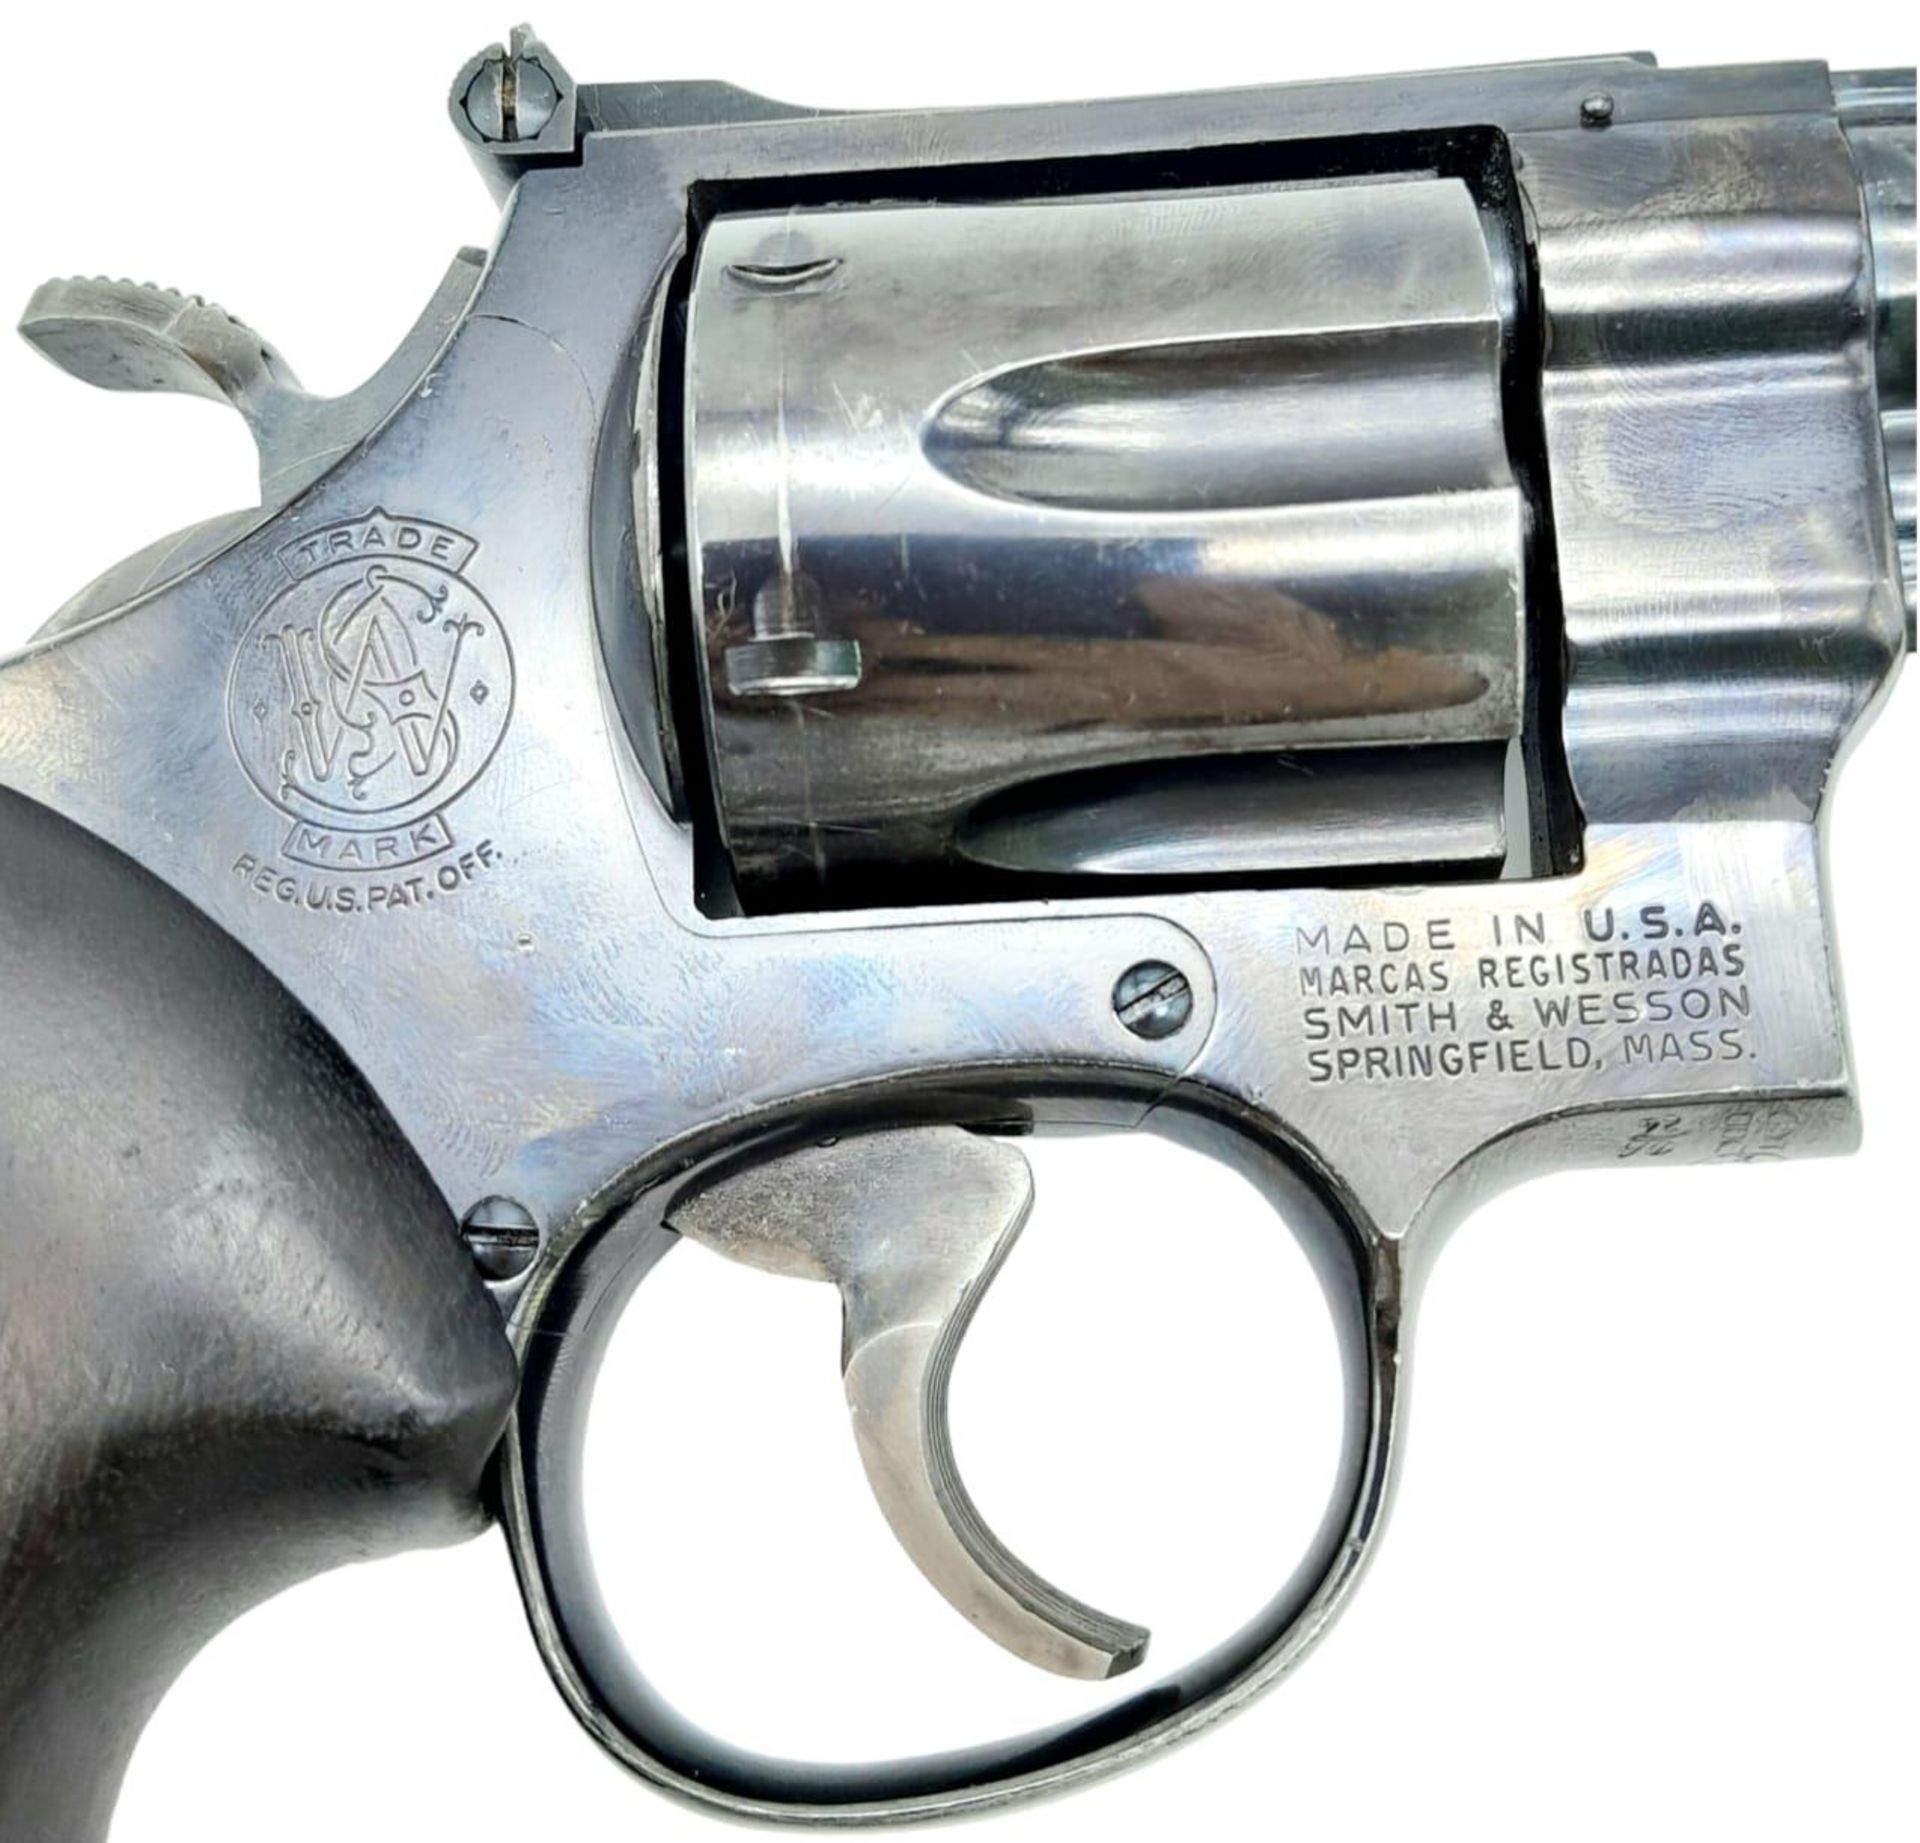 A Smith and Wesson .45 Calibre Revolver. This USA made pistol has a 4 inch barrel with a nice dark - Bild 8 aus 17